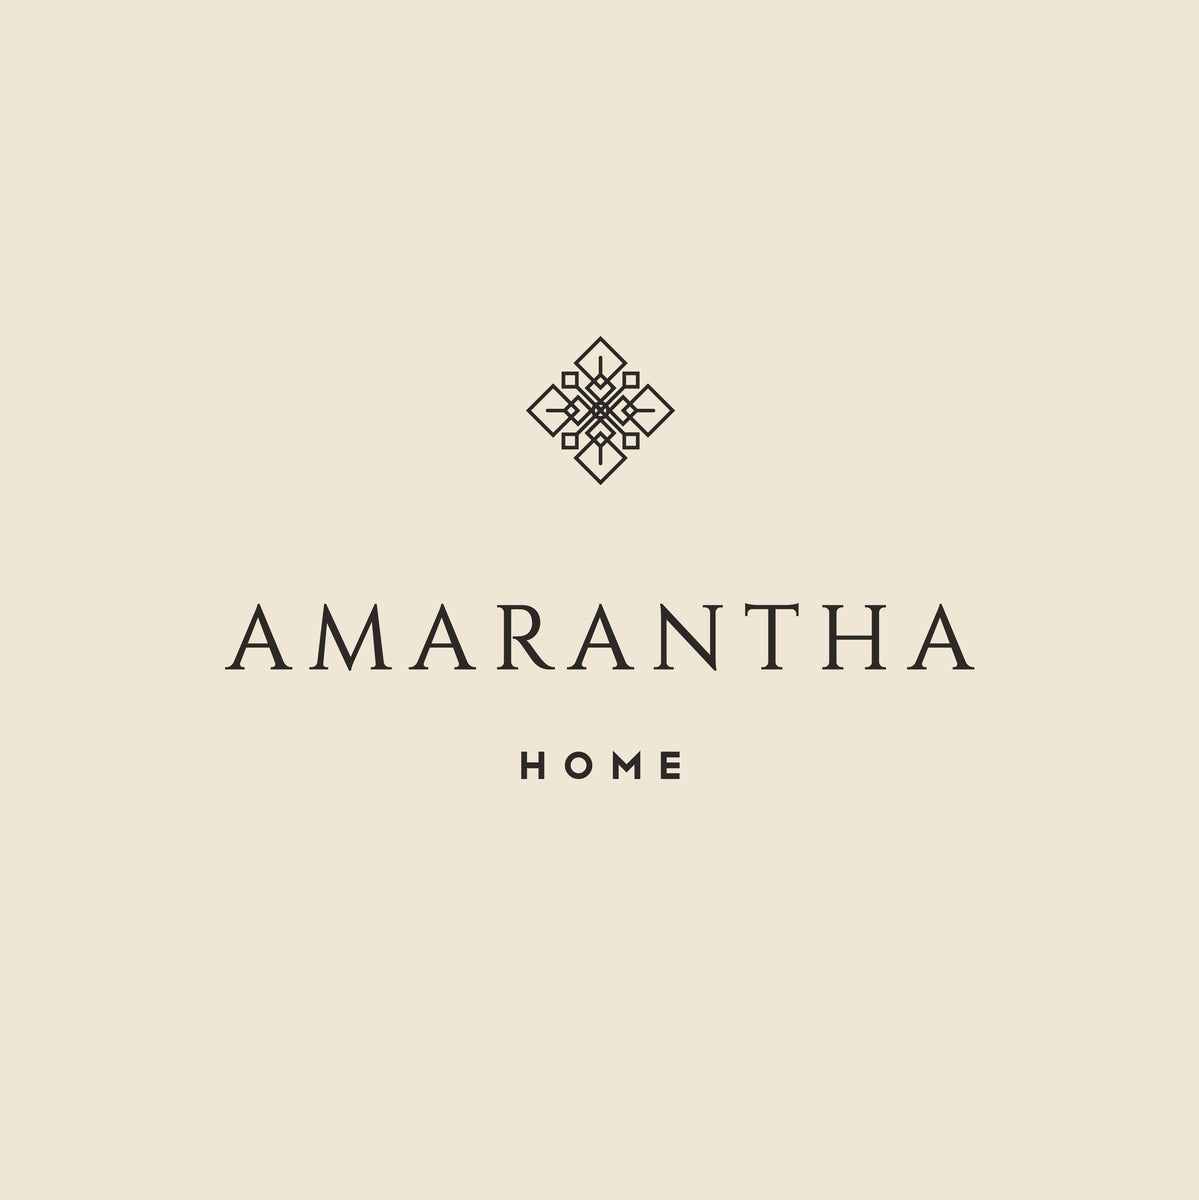 AMARANTHA HOME– Amarantha